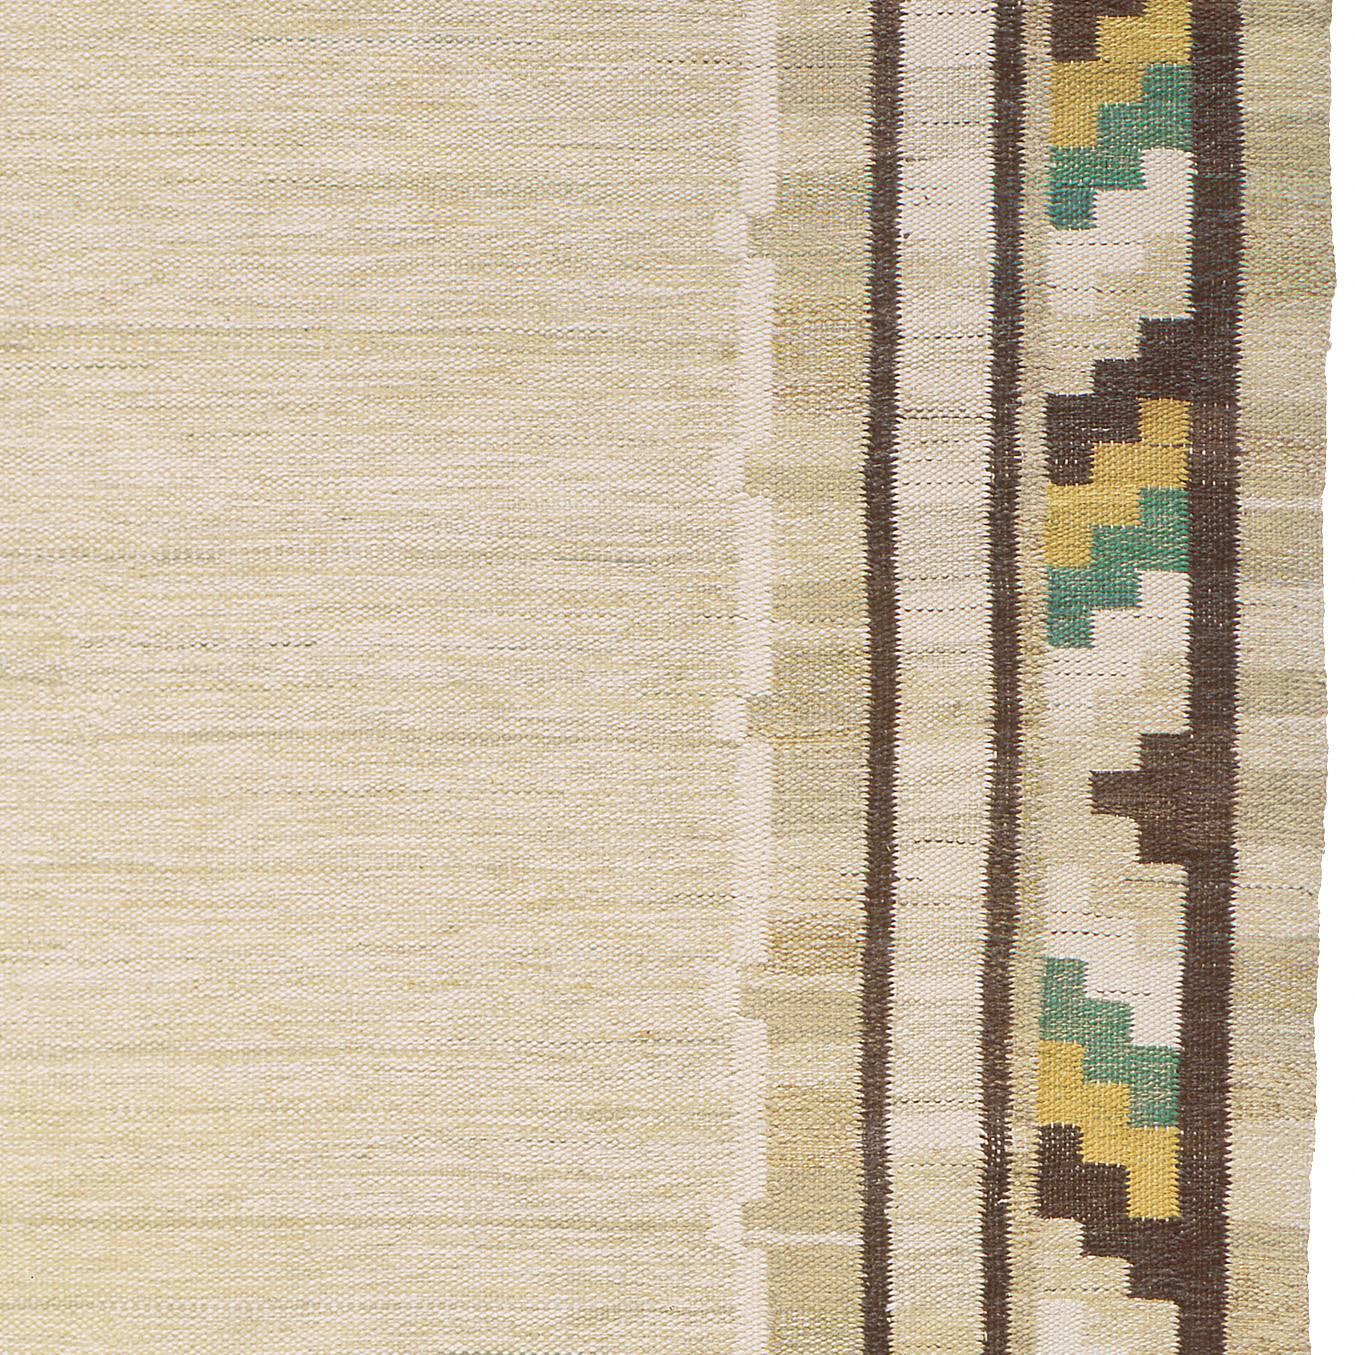 Swedish flat-weave carpet.